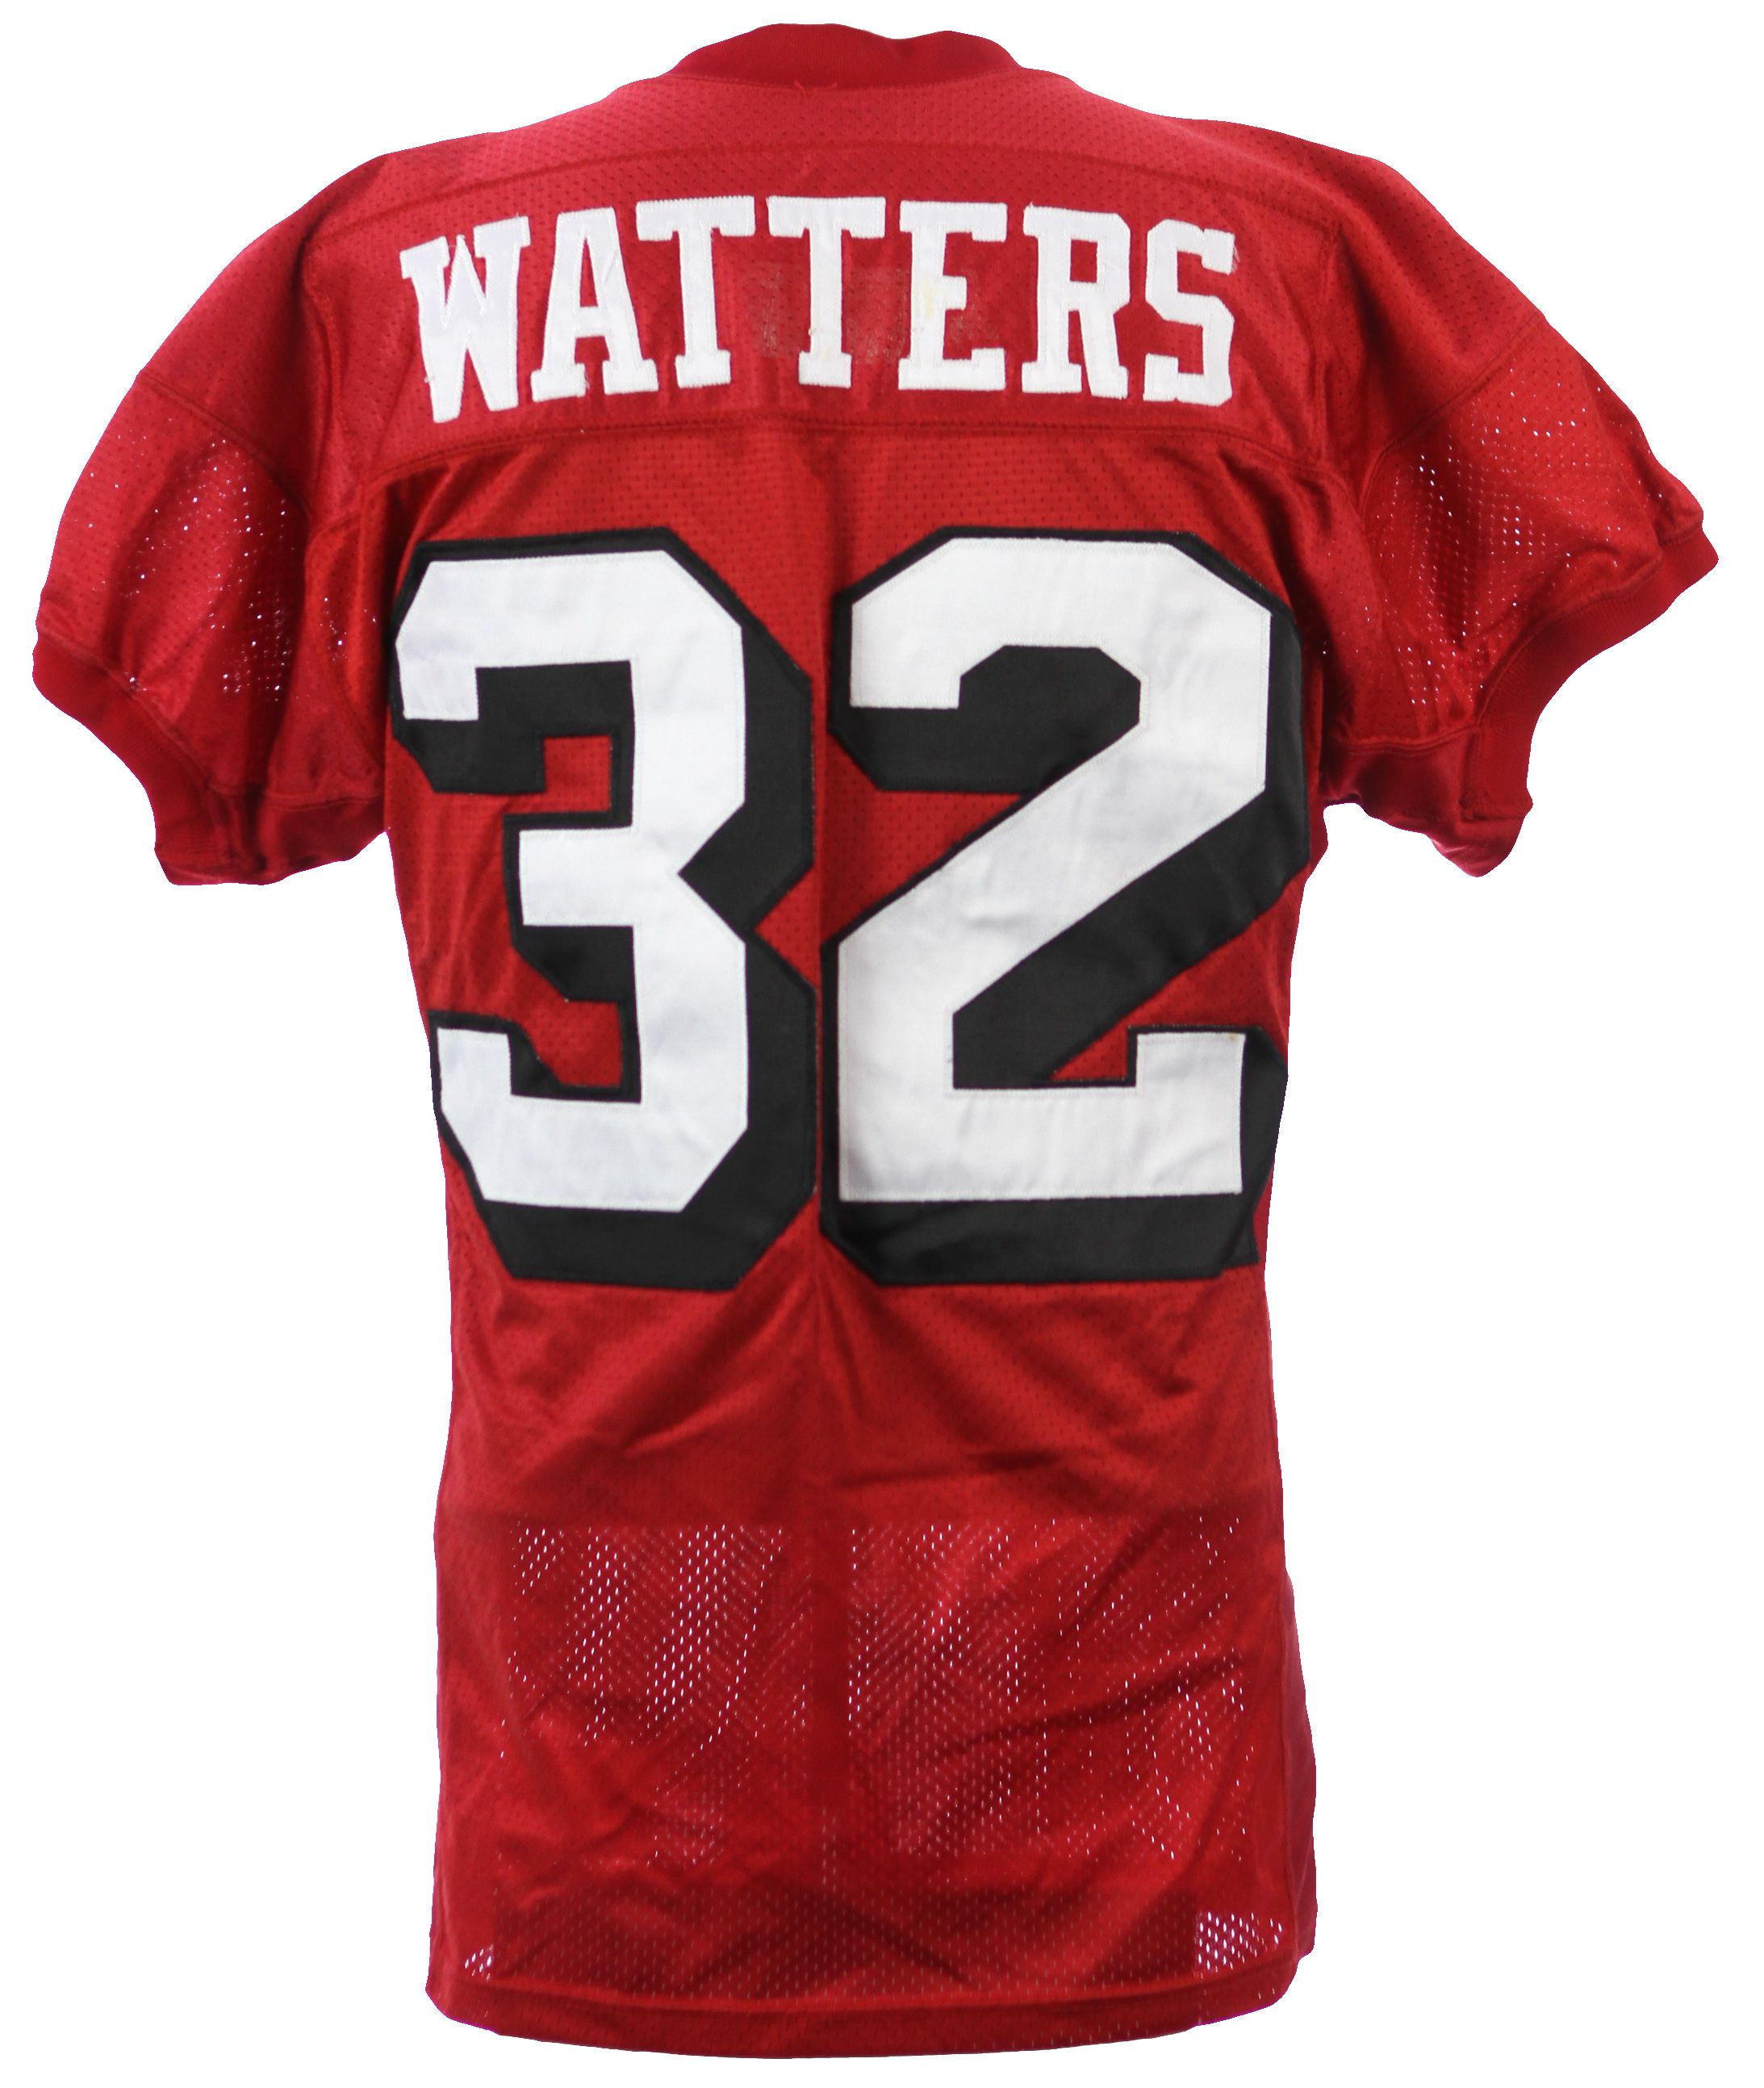 ricky watters 49ers jersey